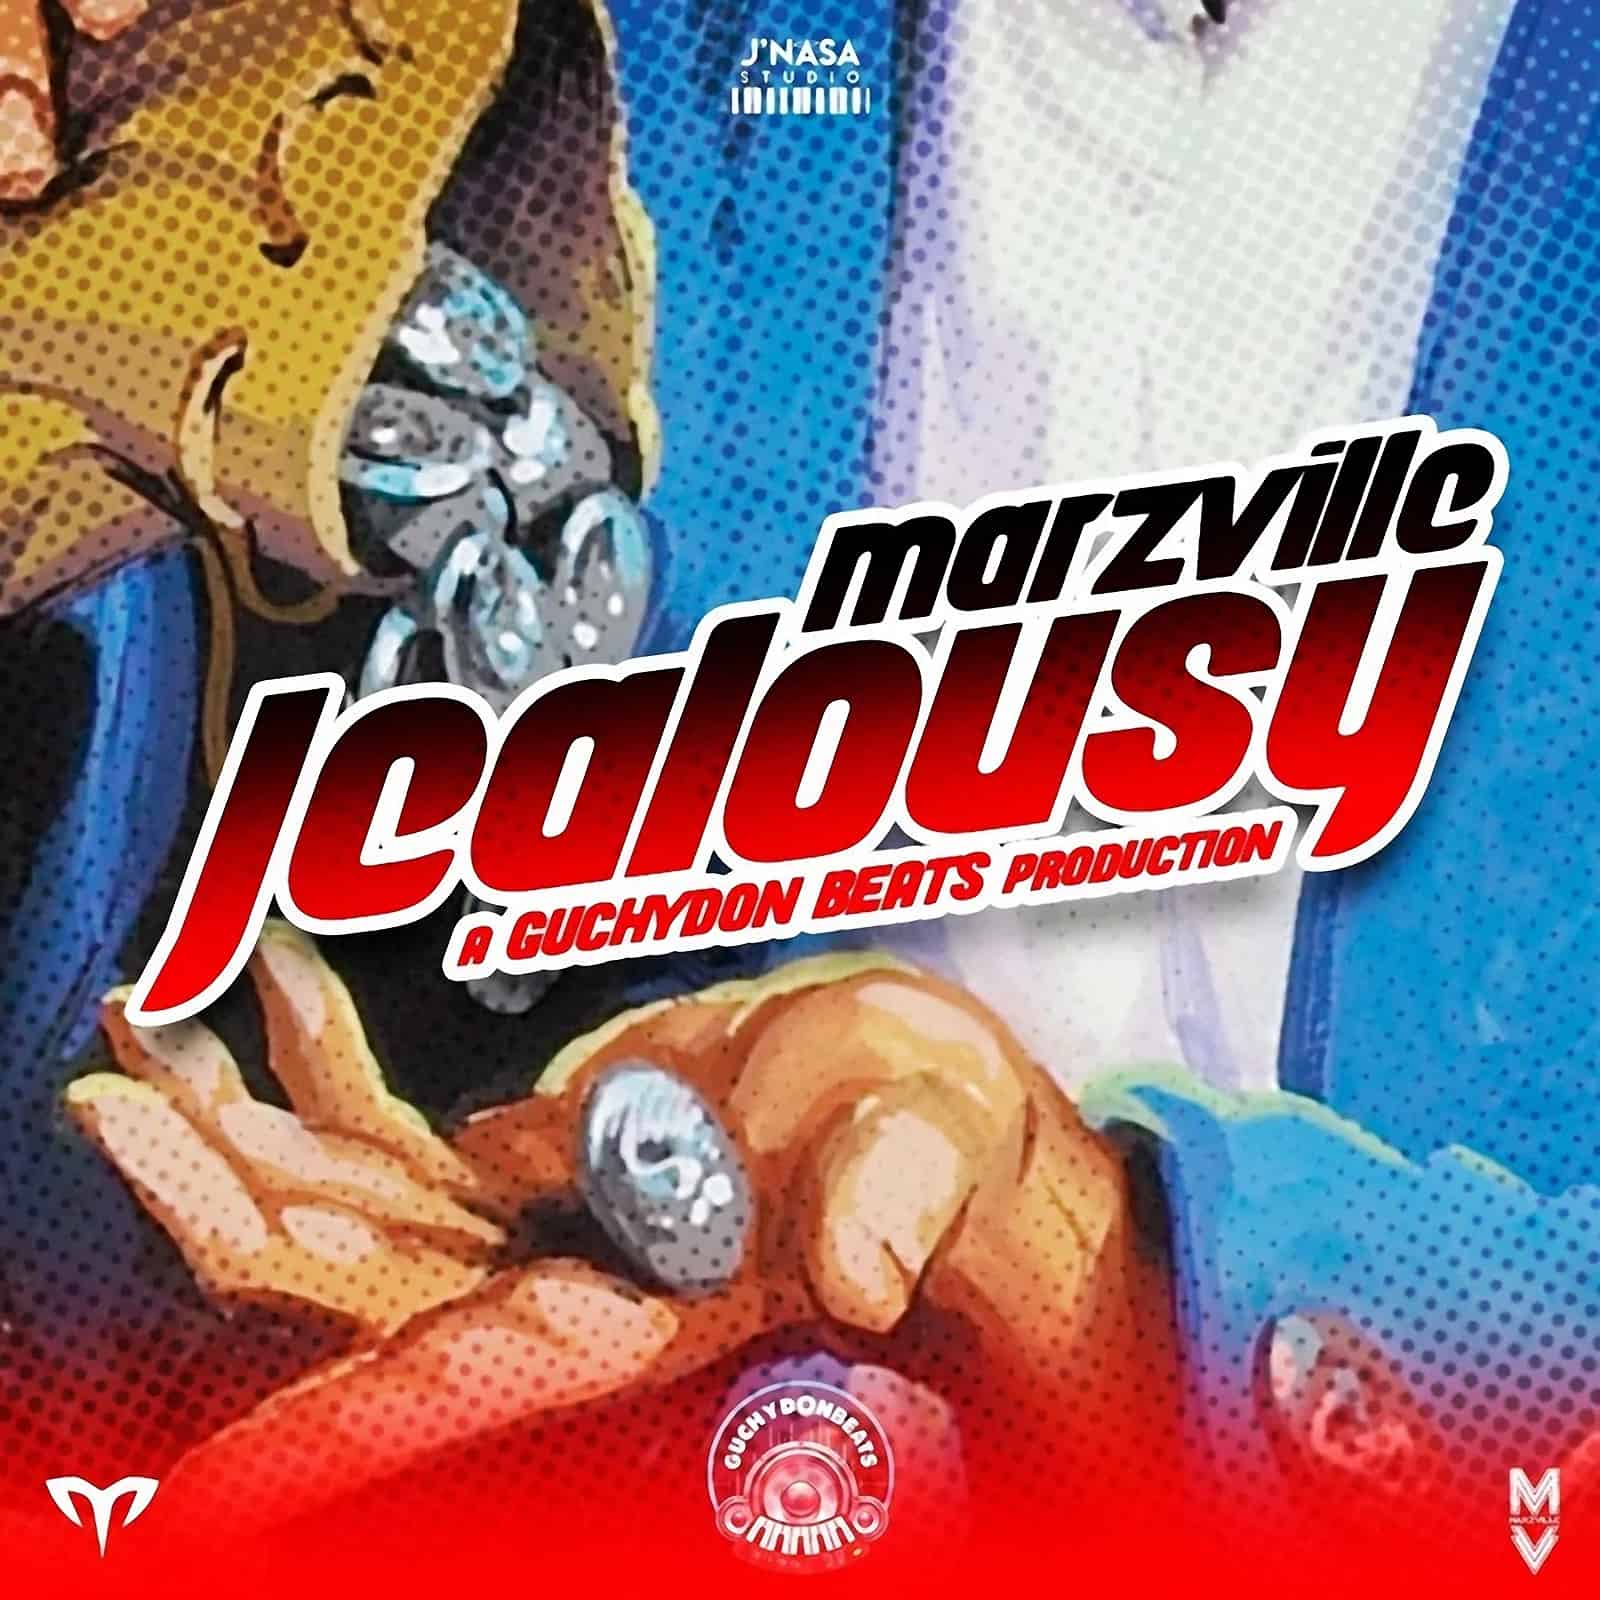 Marzville - Jealousy  - Guchydon Beats Production